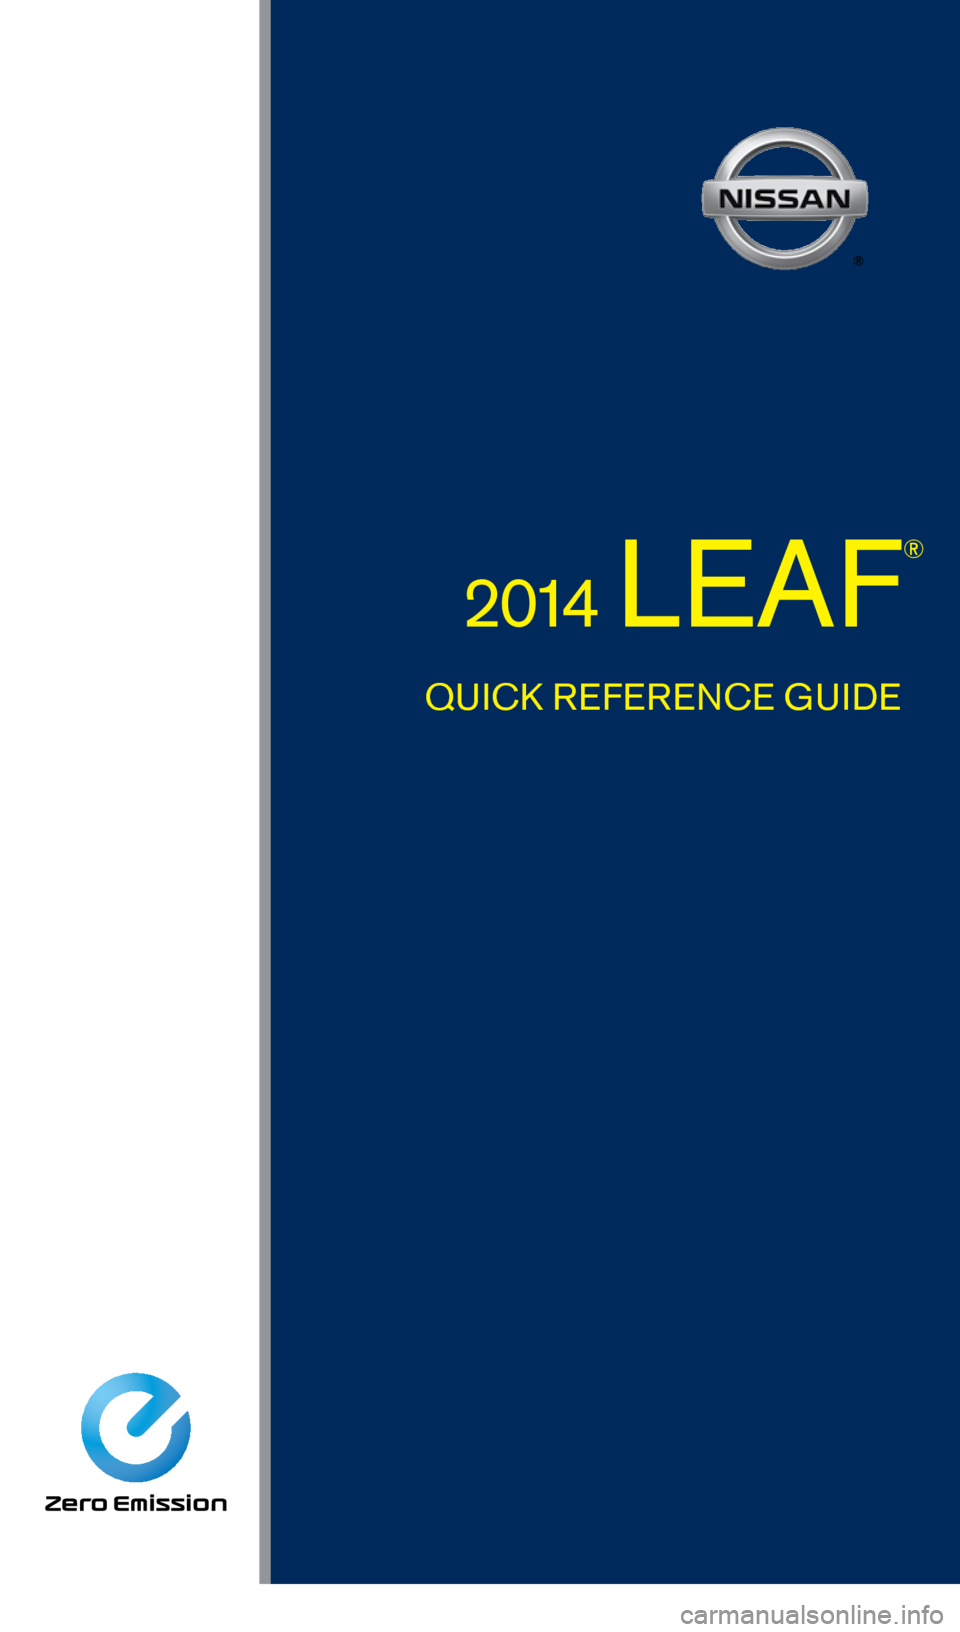 NISSAN LEAF 2014 1.G Quick Reference Guide QUICK REFERENCE GUIDE
2014 LEAF
®
1700496_14b_Leaf_QRG_021114.indd   22/11/14   3:47 PM 